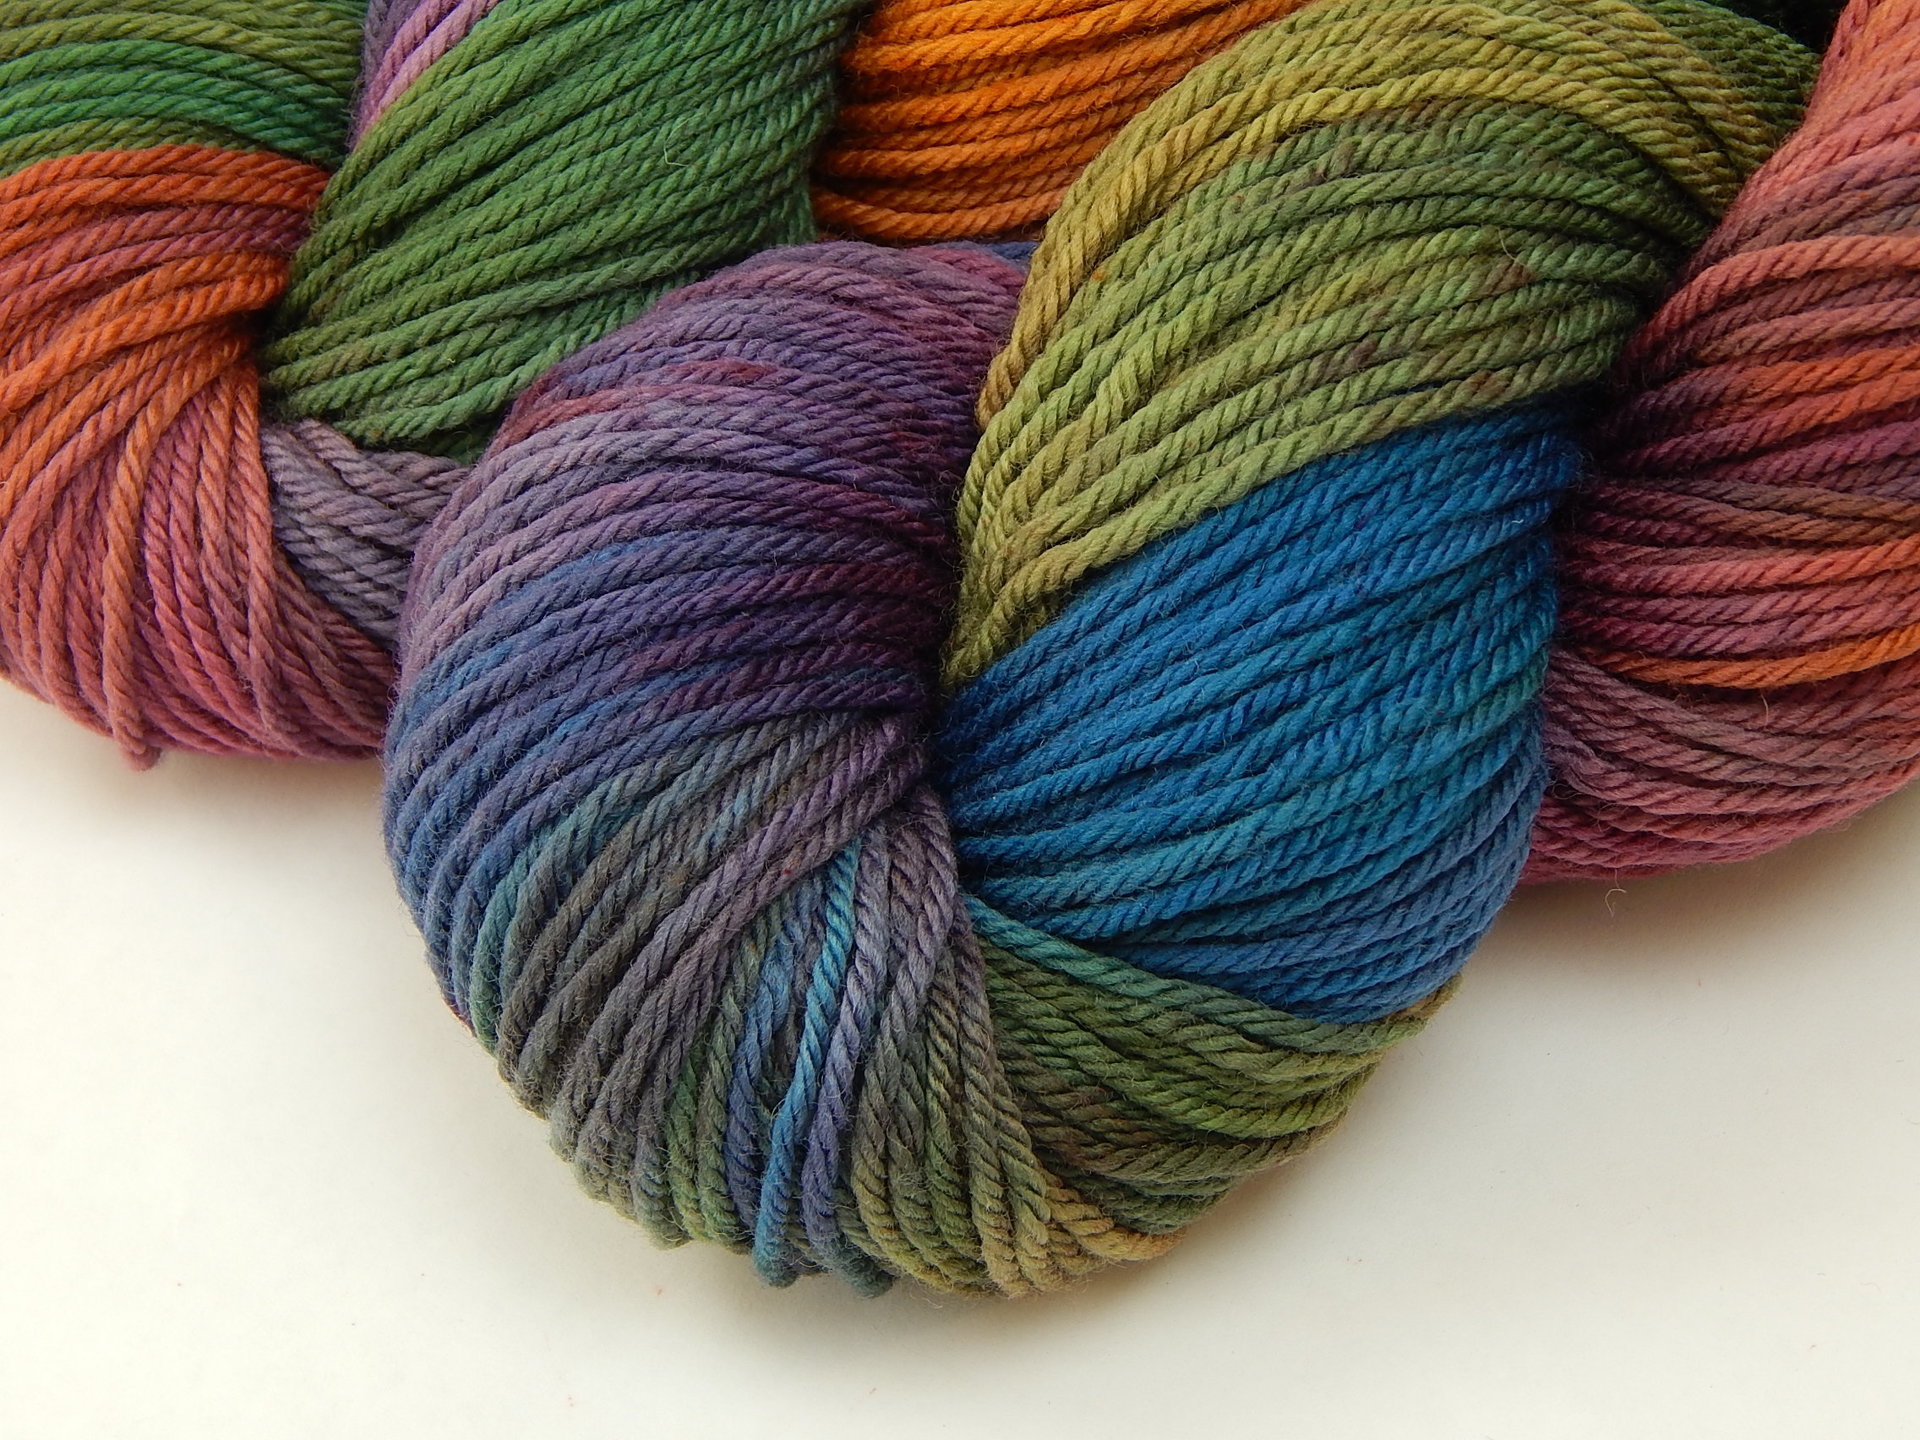 Worsted Weight Hand Dyed Yarn - 100% Superwash Merino Wool - Potluck Rainbow - Indie Dyer OOAK Knitting Crochet Yarn, Deep Rich Vibrant Colors